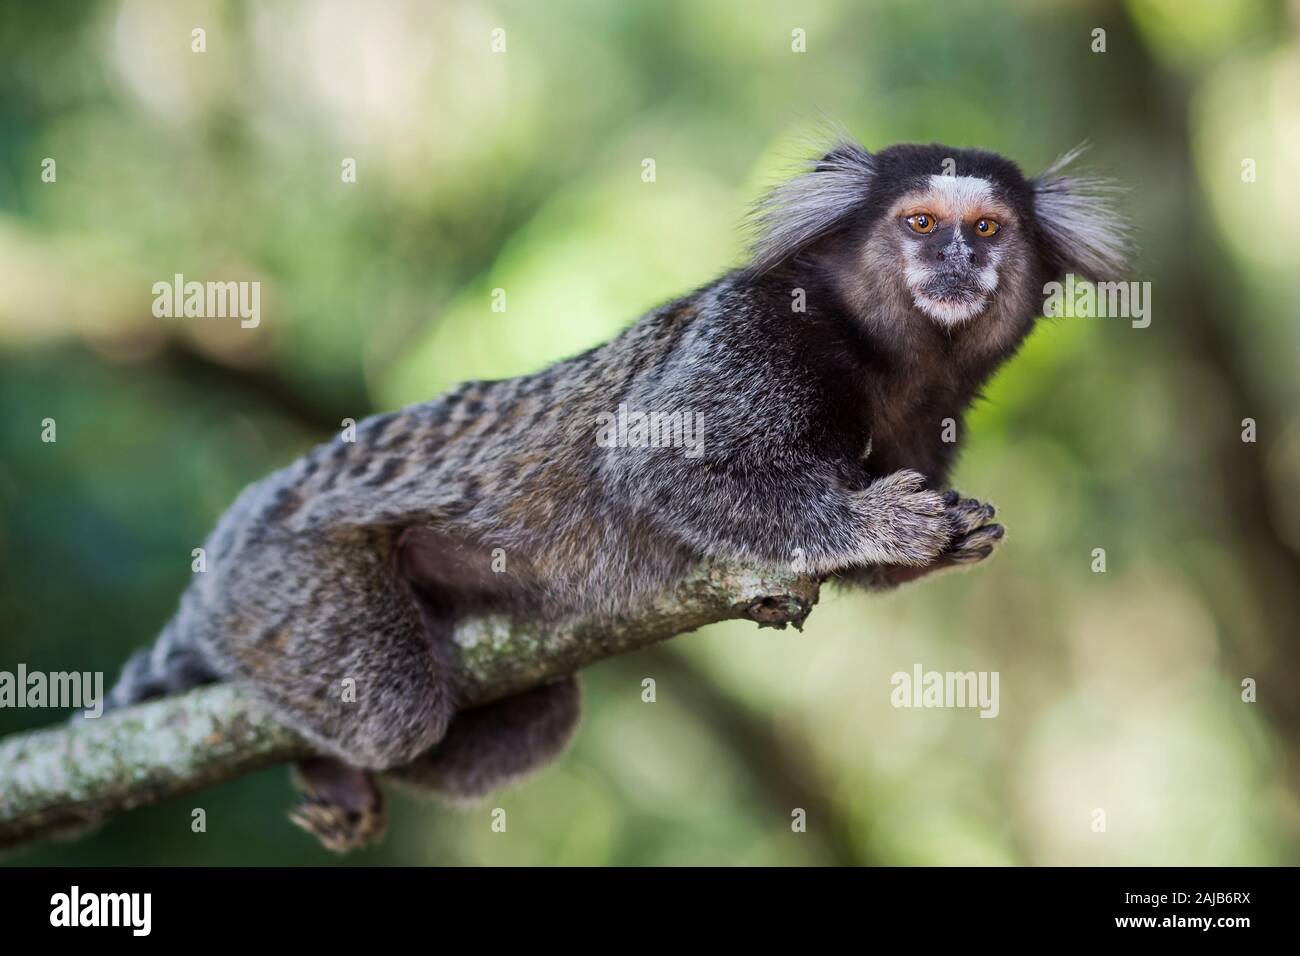 Sagui monkey in the wild in Rio de Janeiro, Brazil. Stock Photo